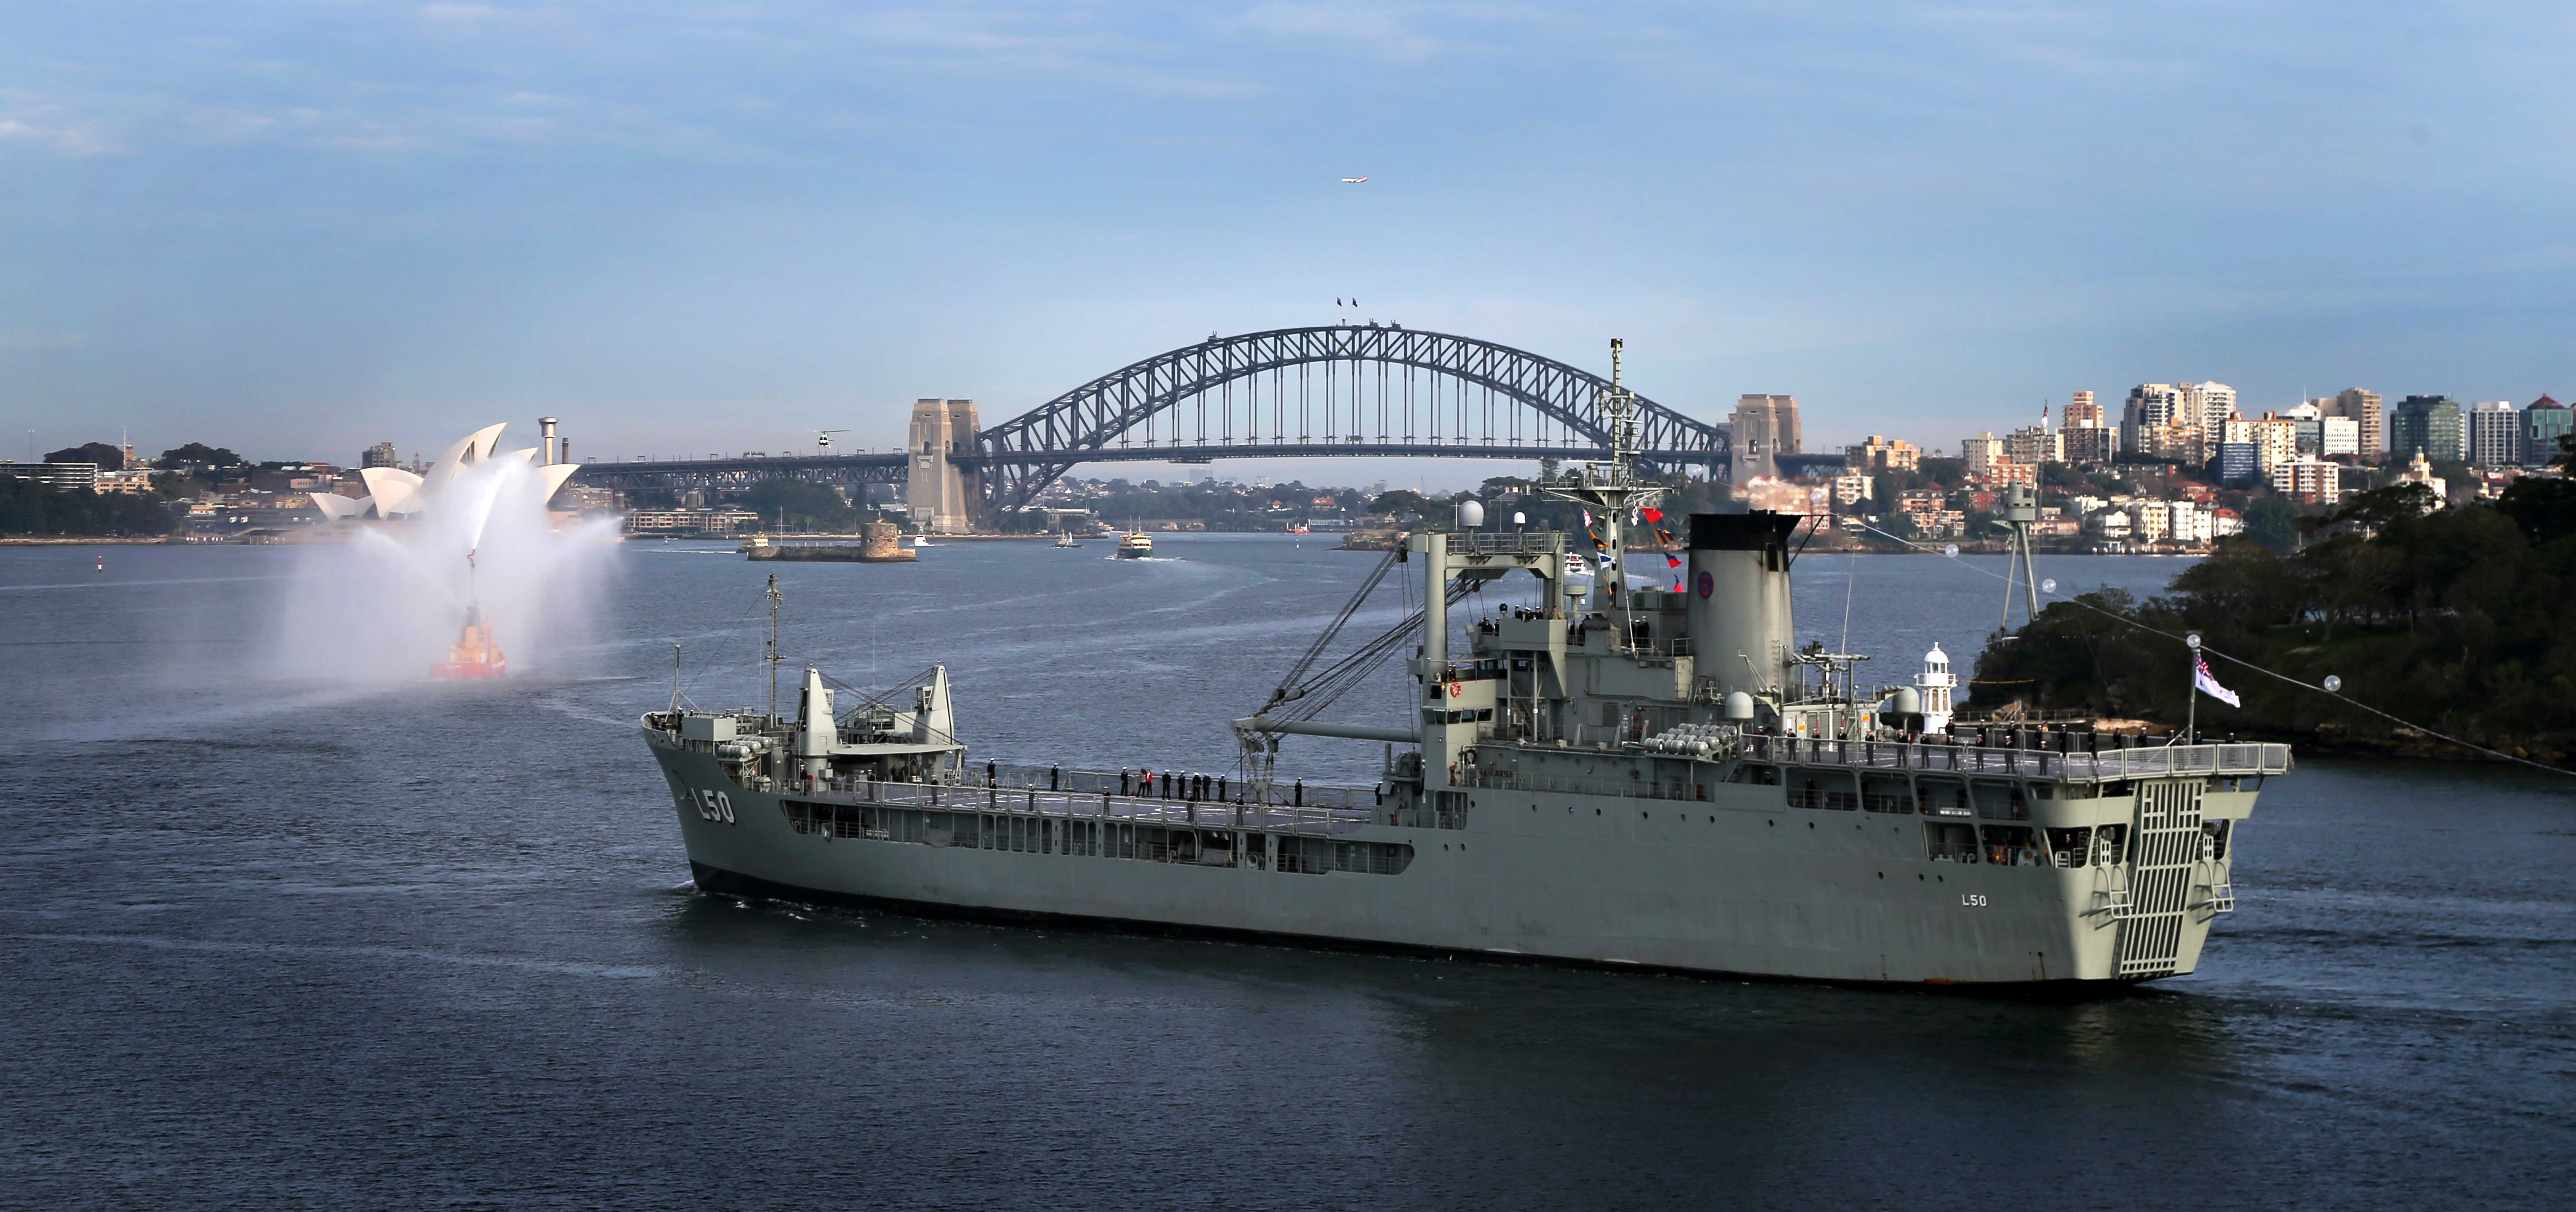 HMA Ships Task Group entry into Sydney